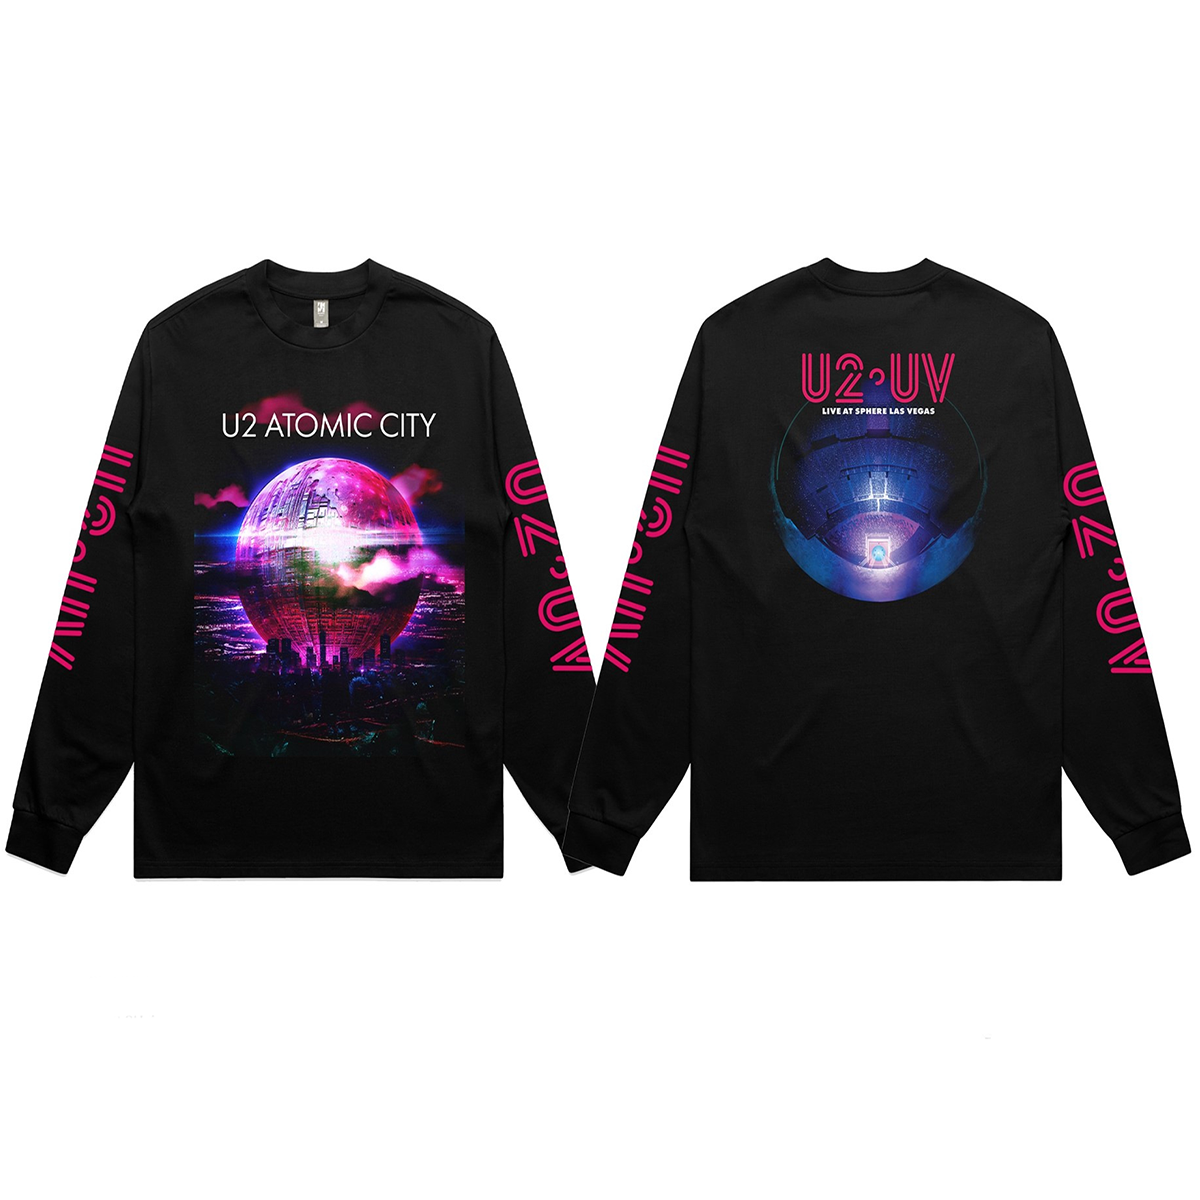 U2 UV Atomic City Long Sleeve